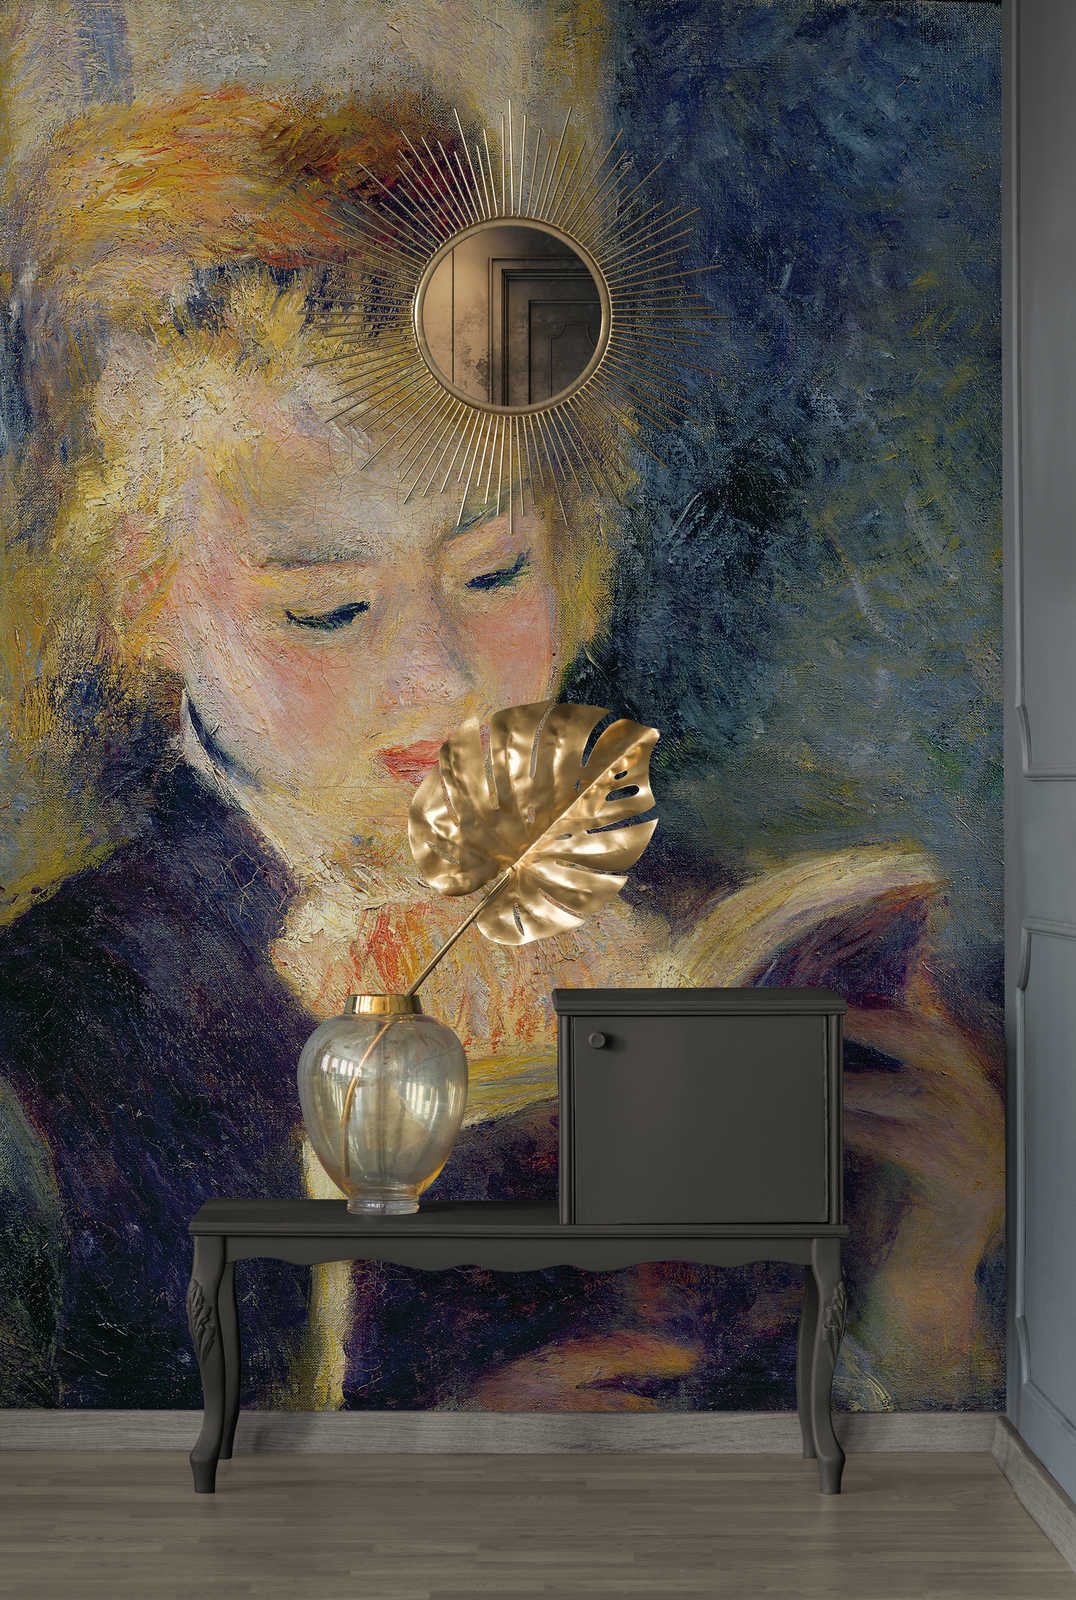             Mural "Reading Girl" de Pierre Auguste Renoir
        